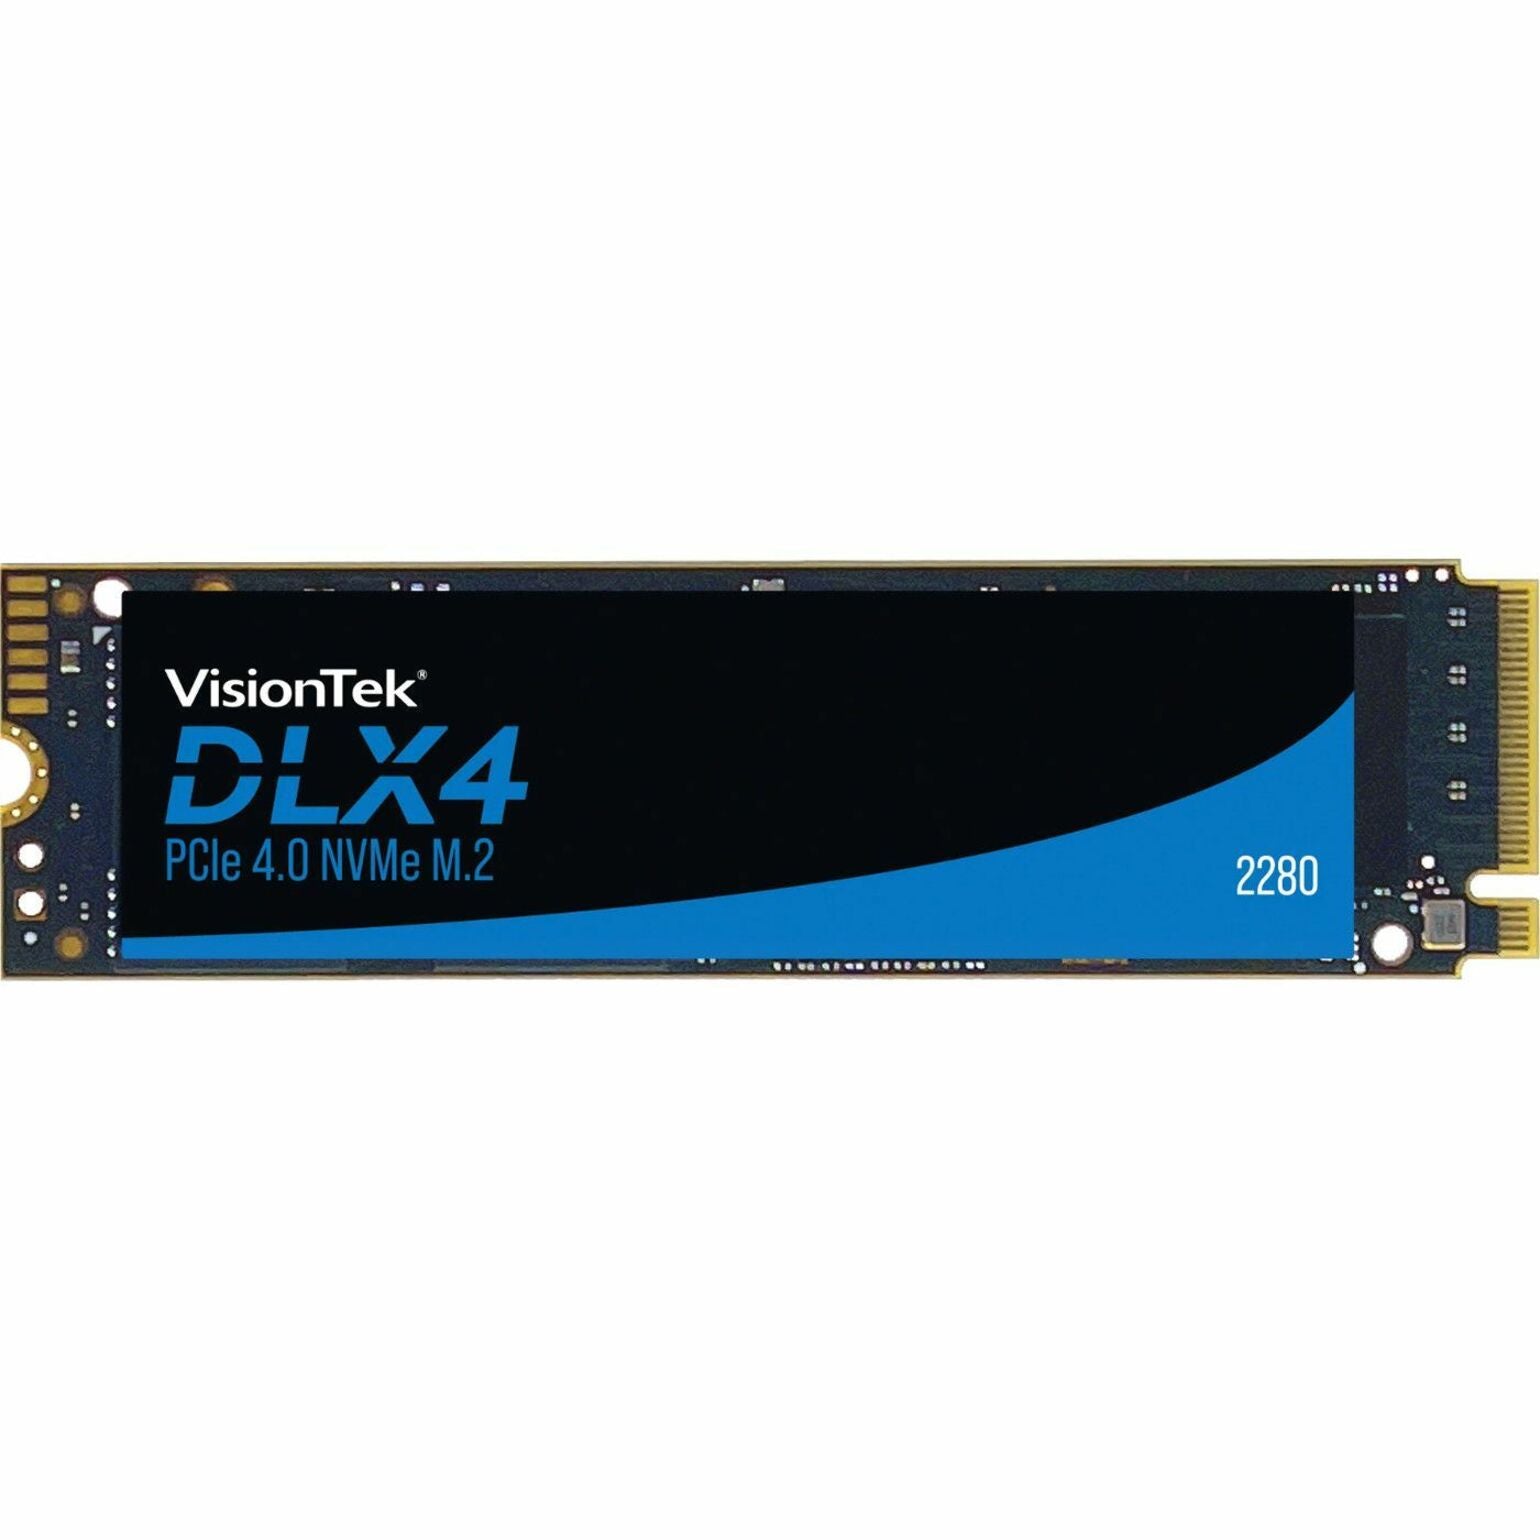 VisionTek 901566 DLX4 2280 M.2 PCIe 4.0 x4 SSD (NVMe), 2TB Storage Capacity, 5 Year Warranty